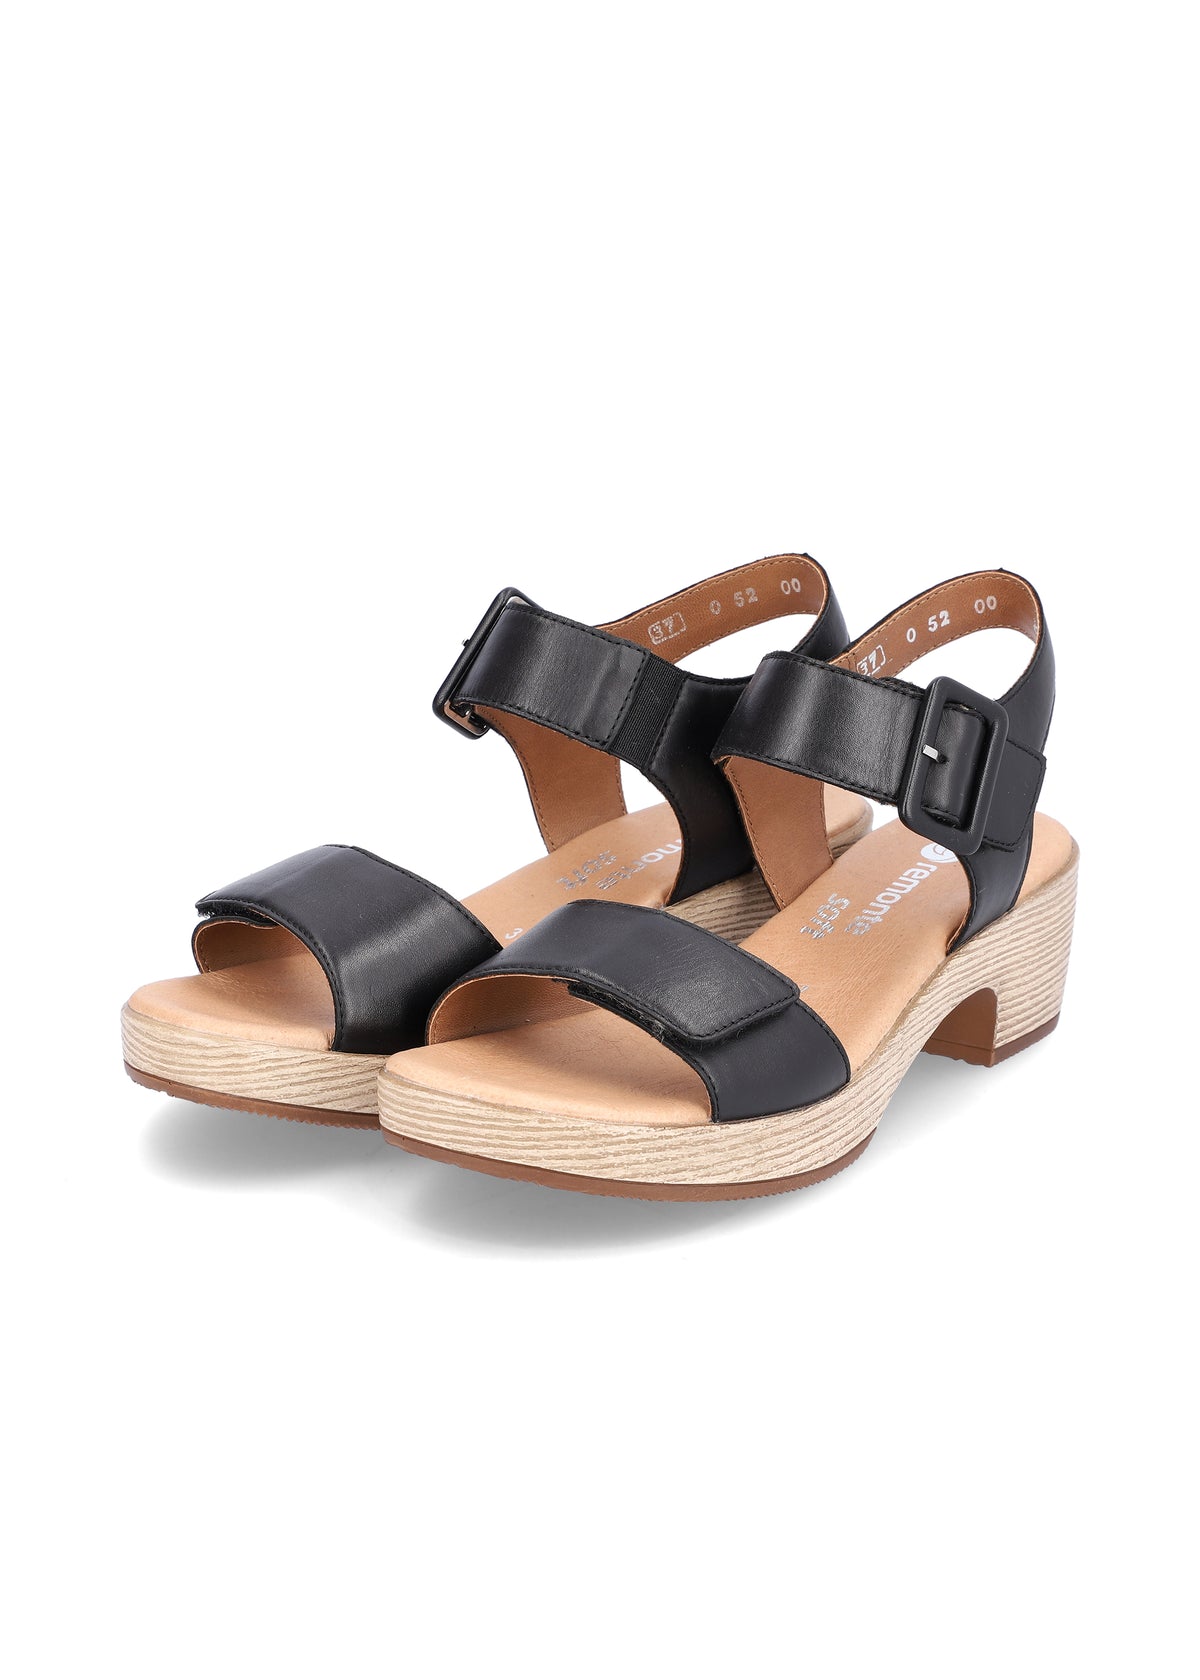 Sandals - black, clog-like sole